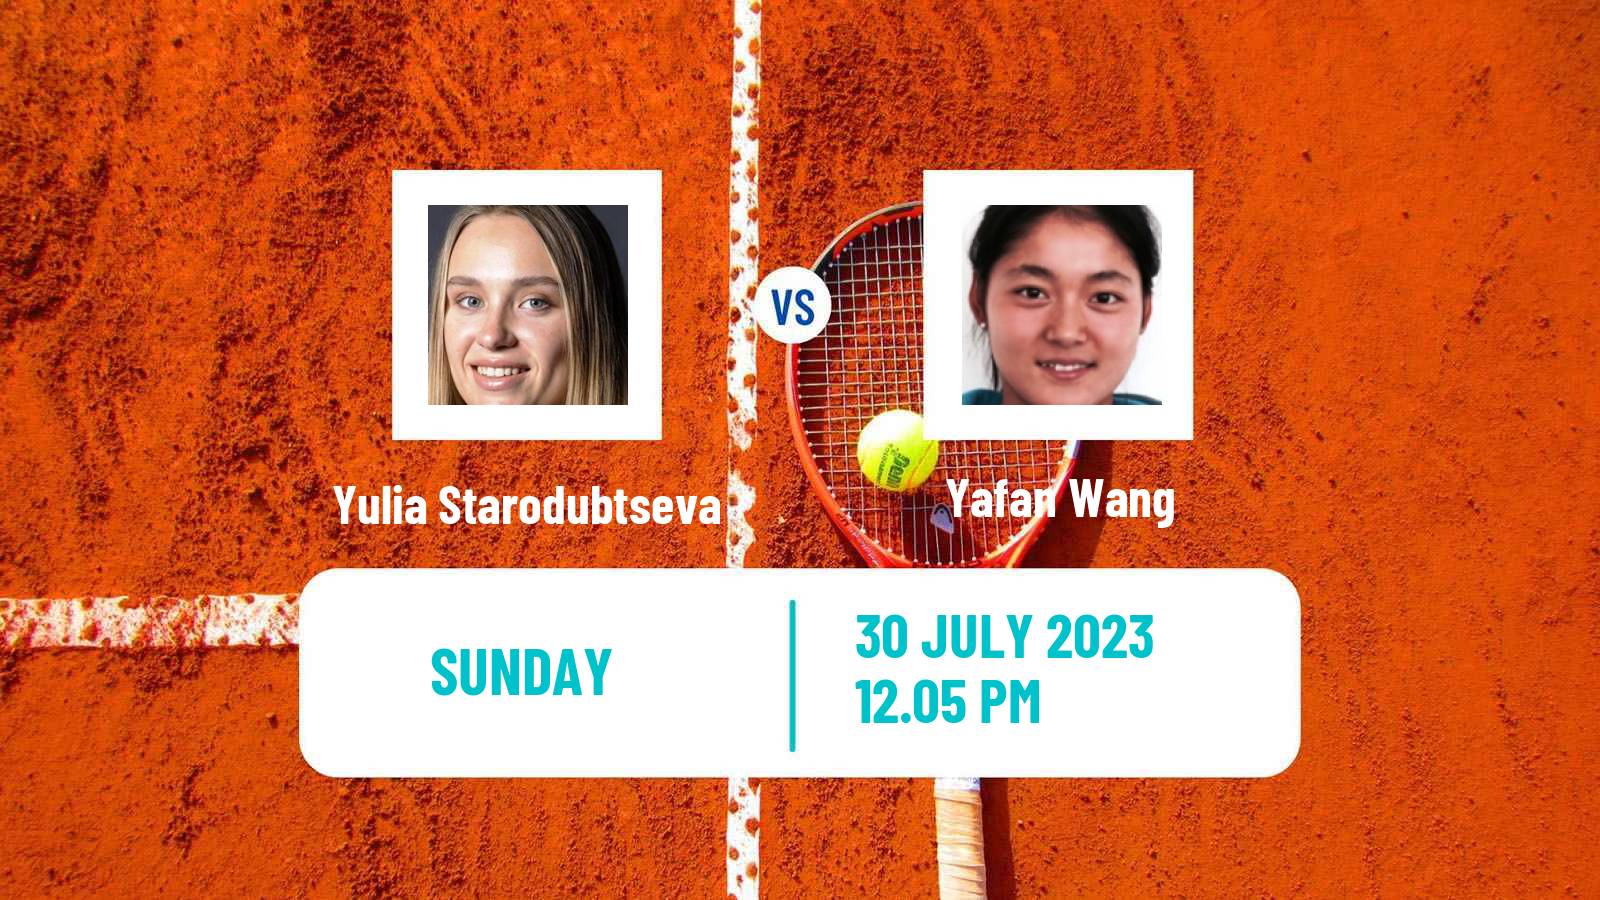 Tennis ITF W60 Dallas Tx Women Yulia Starodubtseva - Yafan Wang